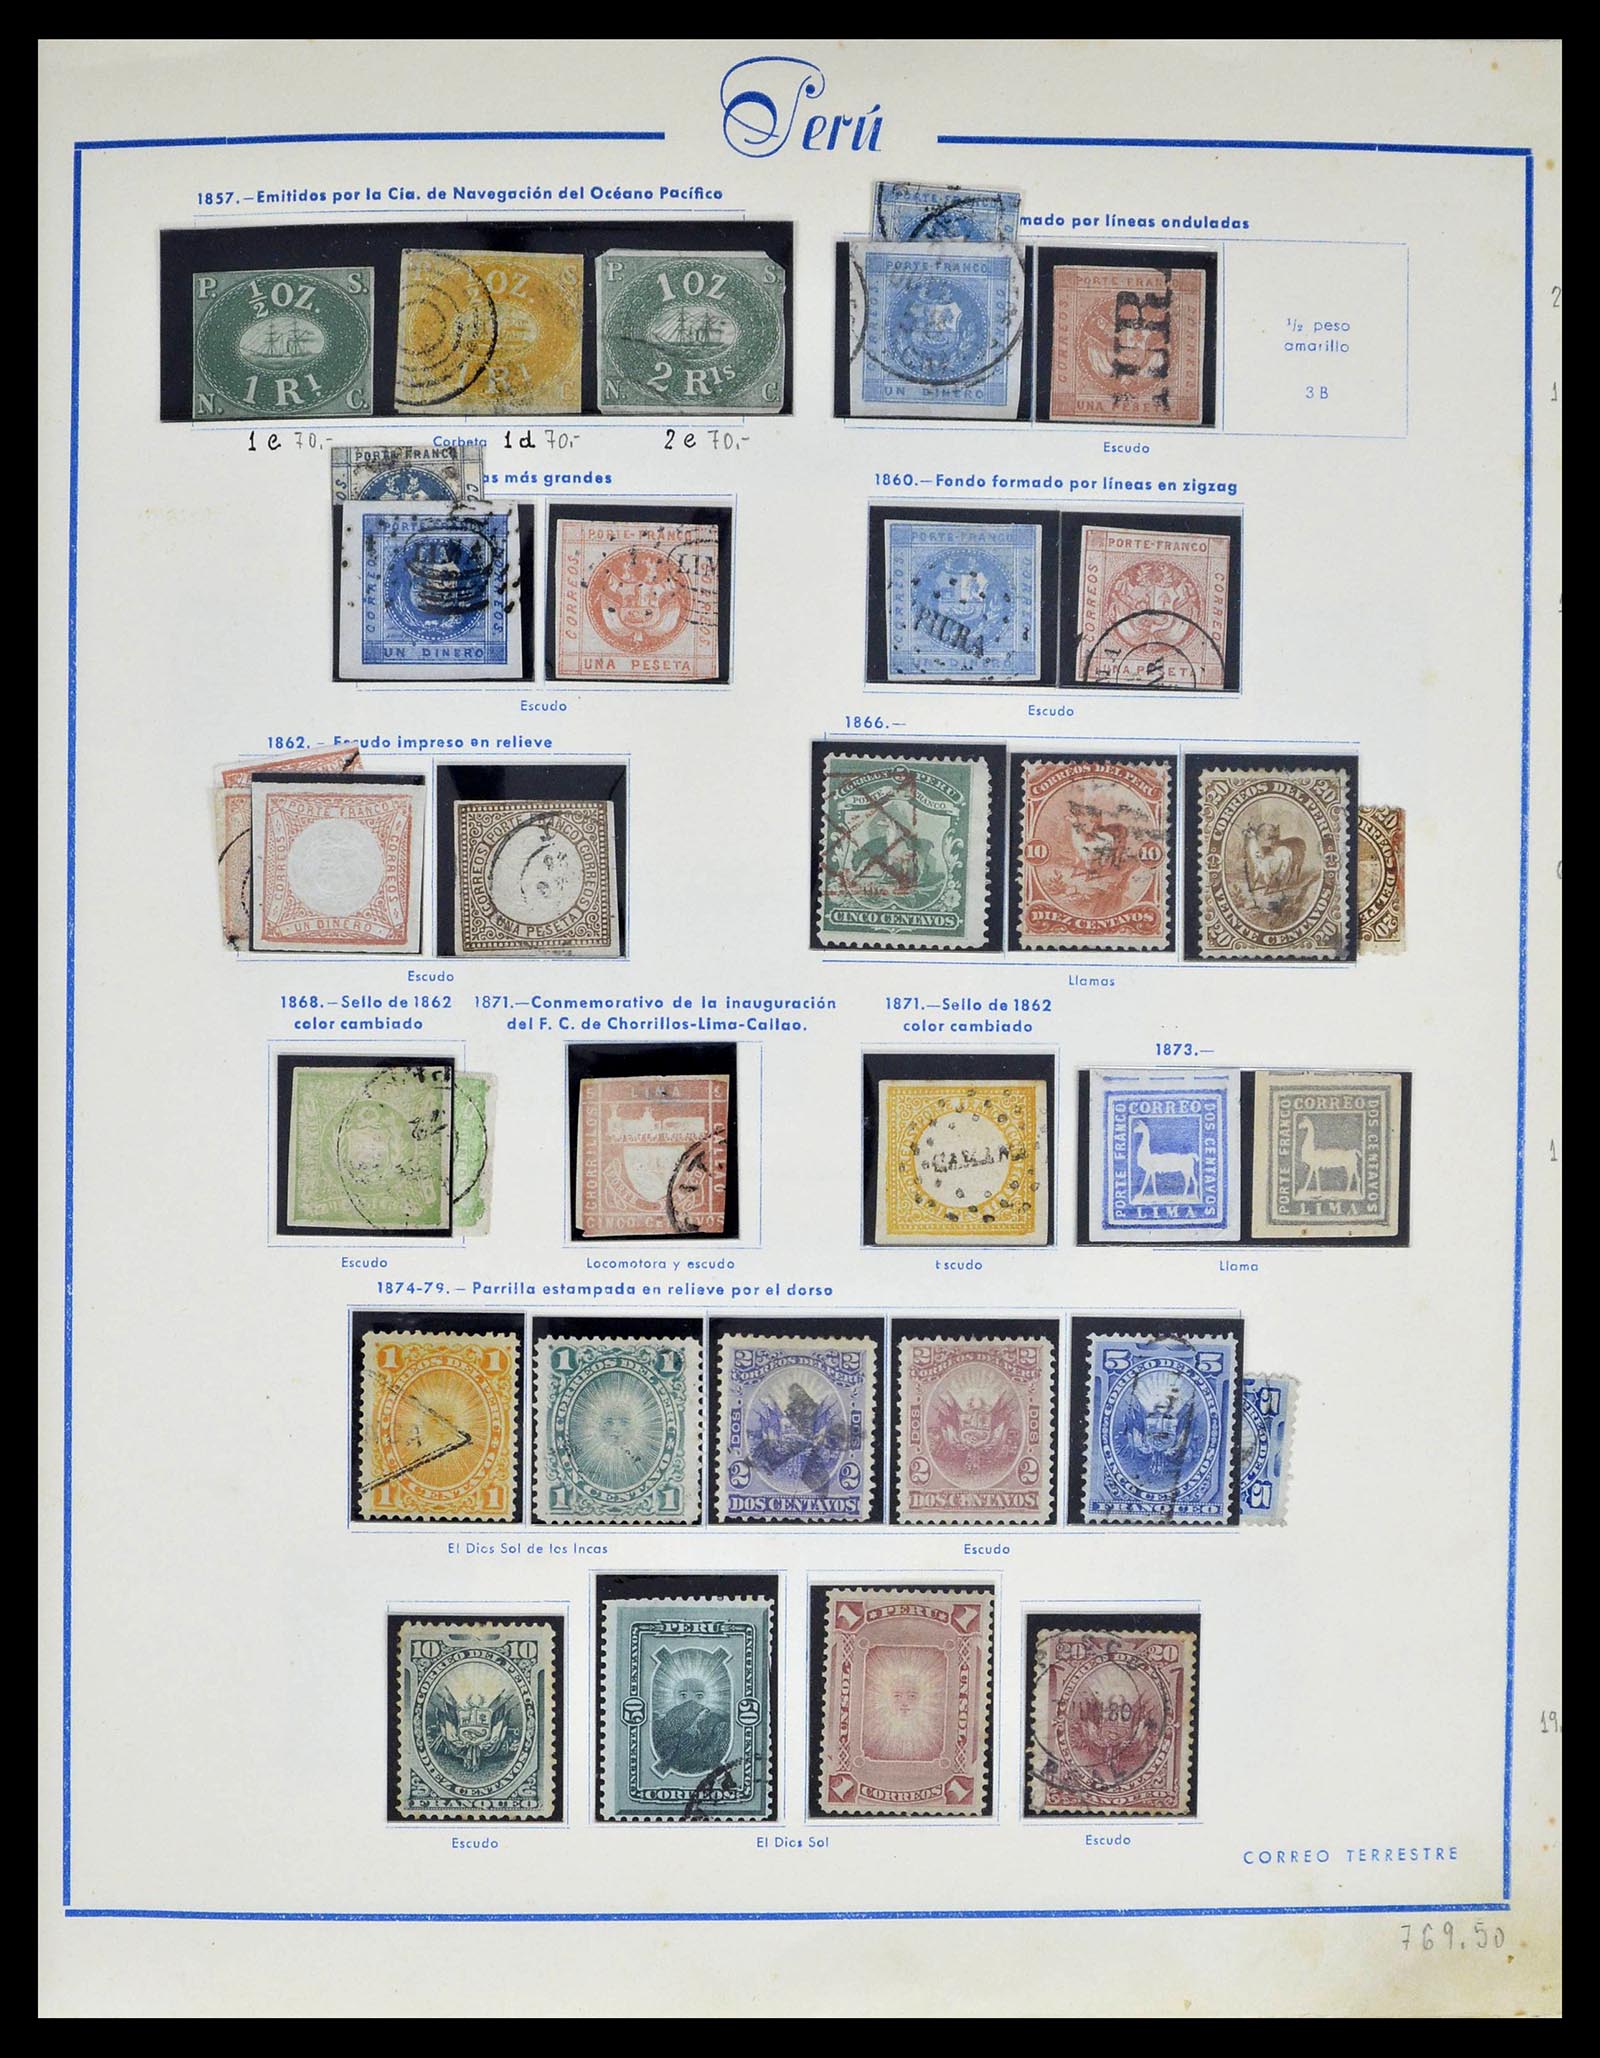 39214 0002 - Stamp collection 39214 Peru 1857-1981.